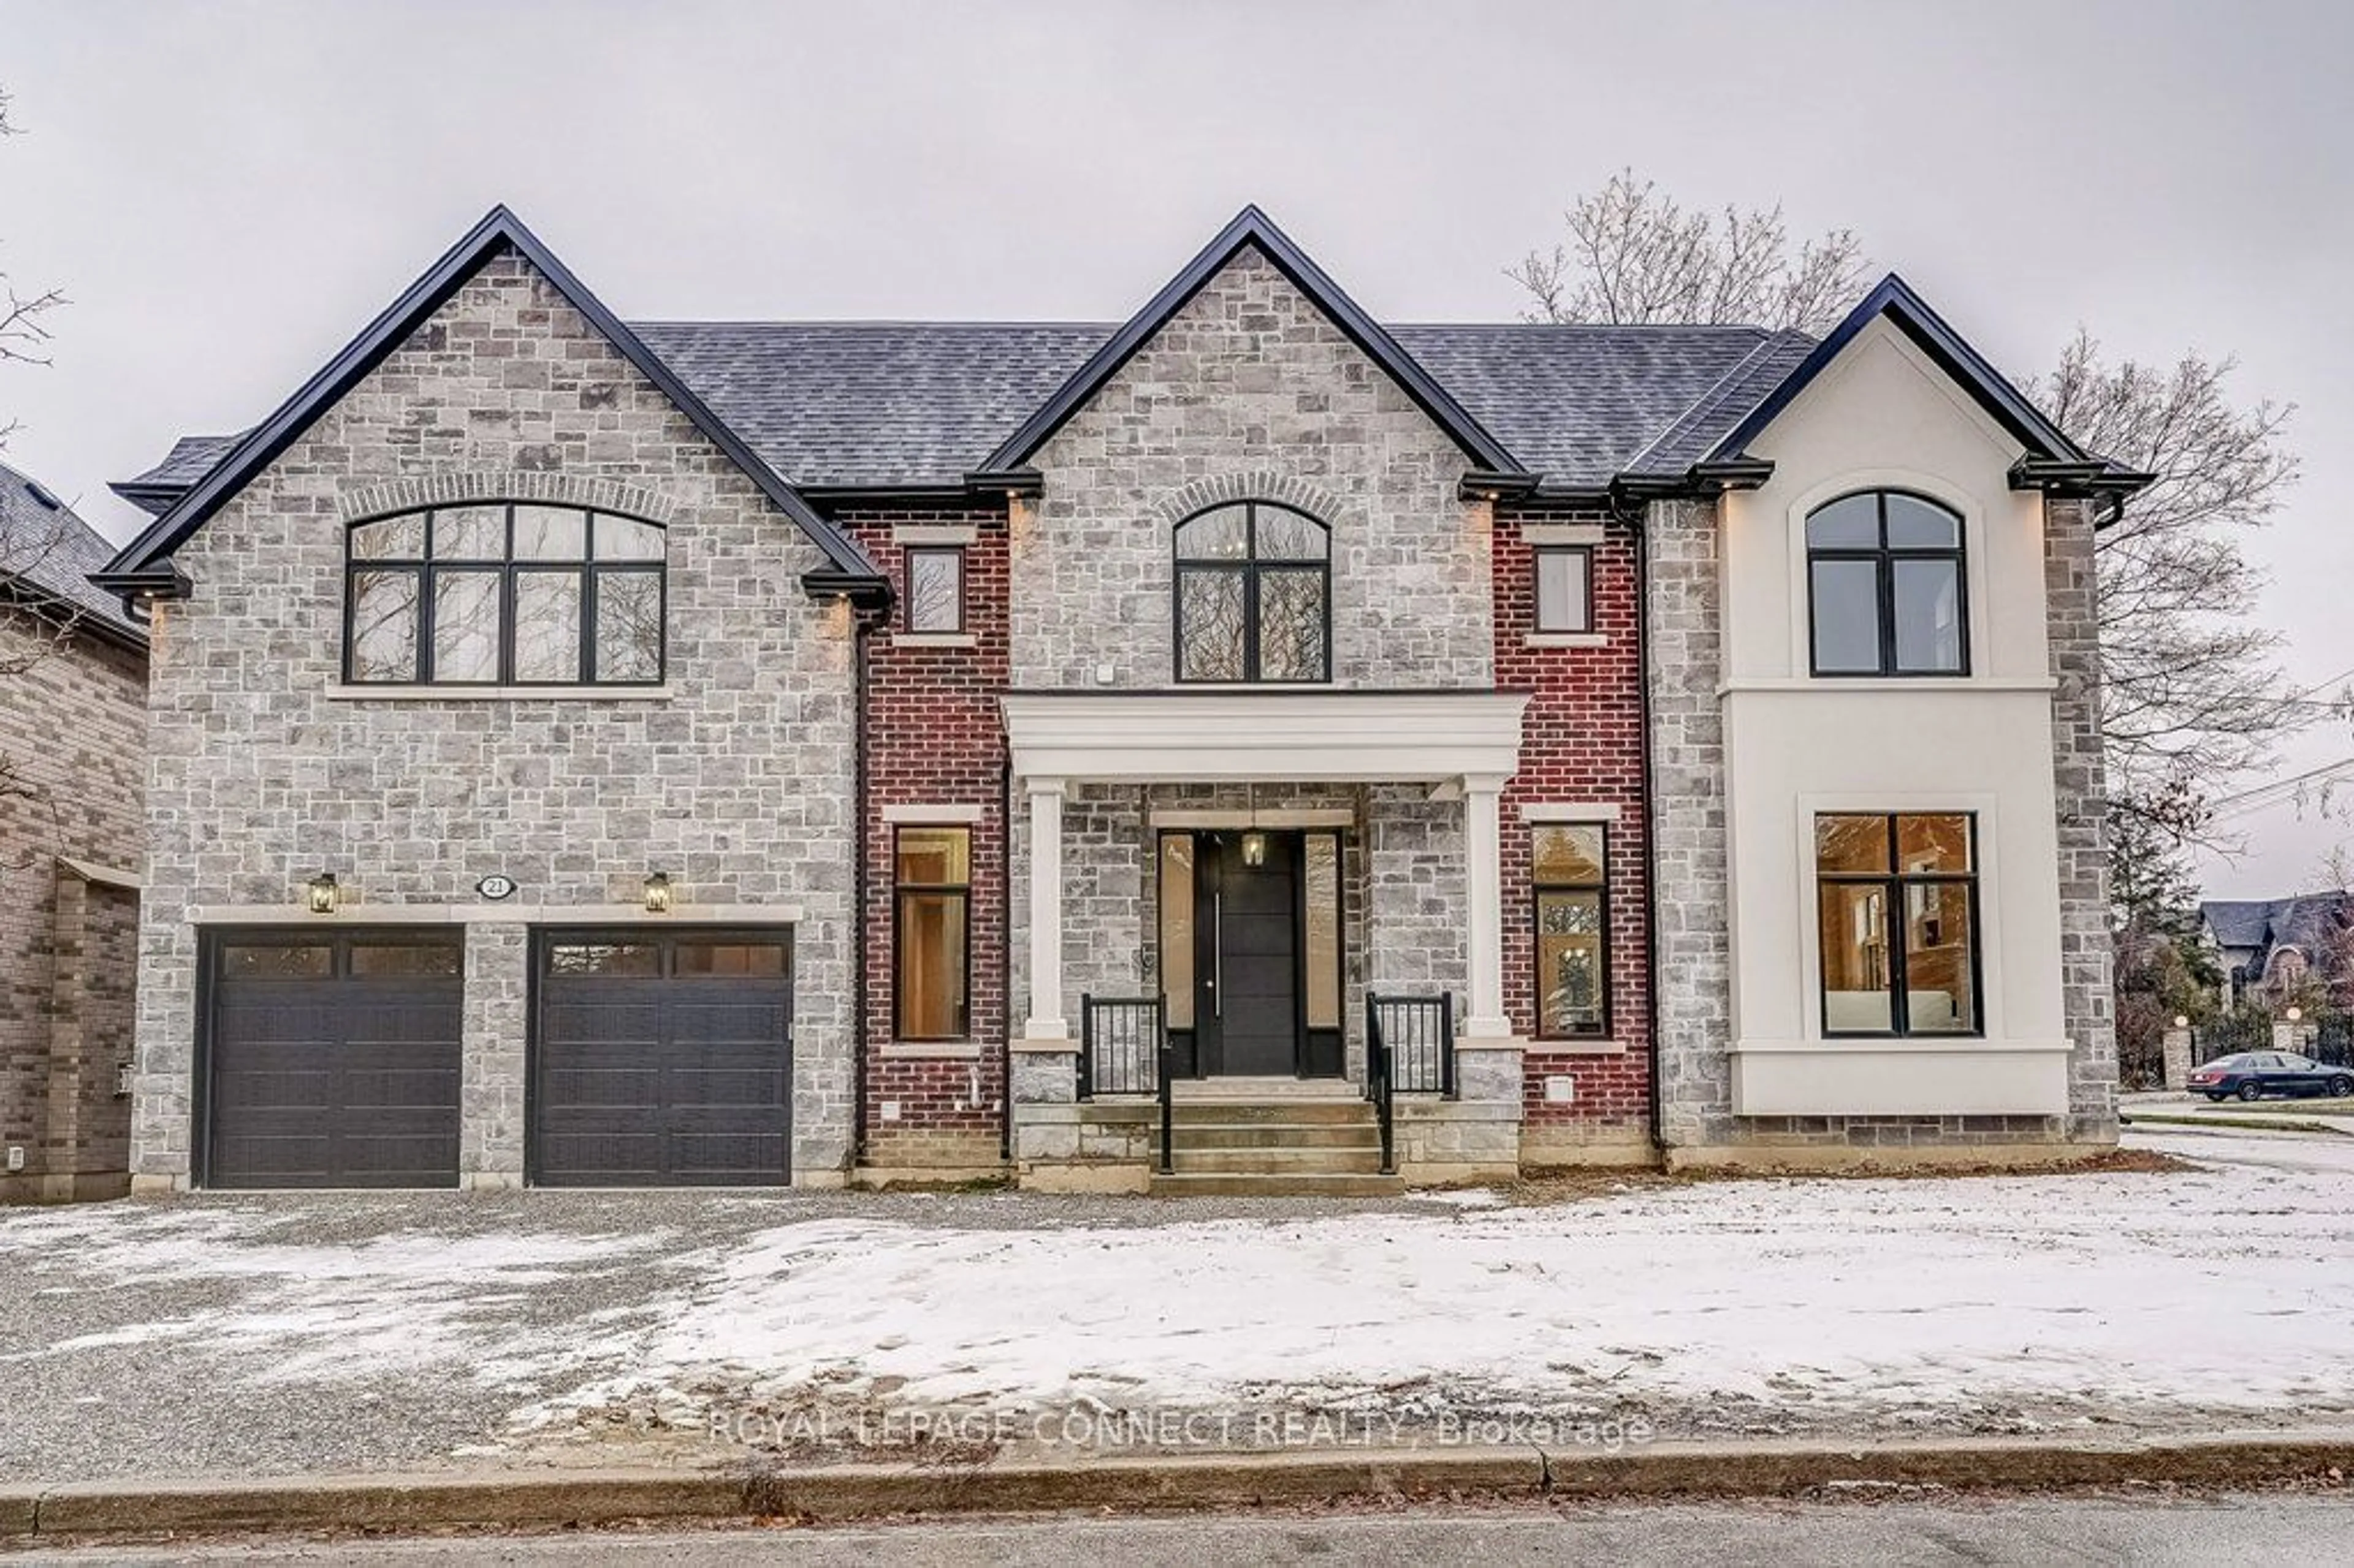 Home with brick exterior material for 21 Esposito Crt, Toronto Ontario M9C 5H6